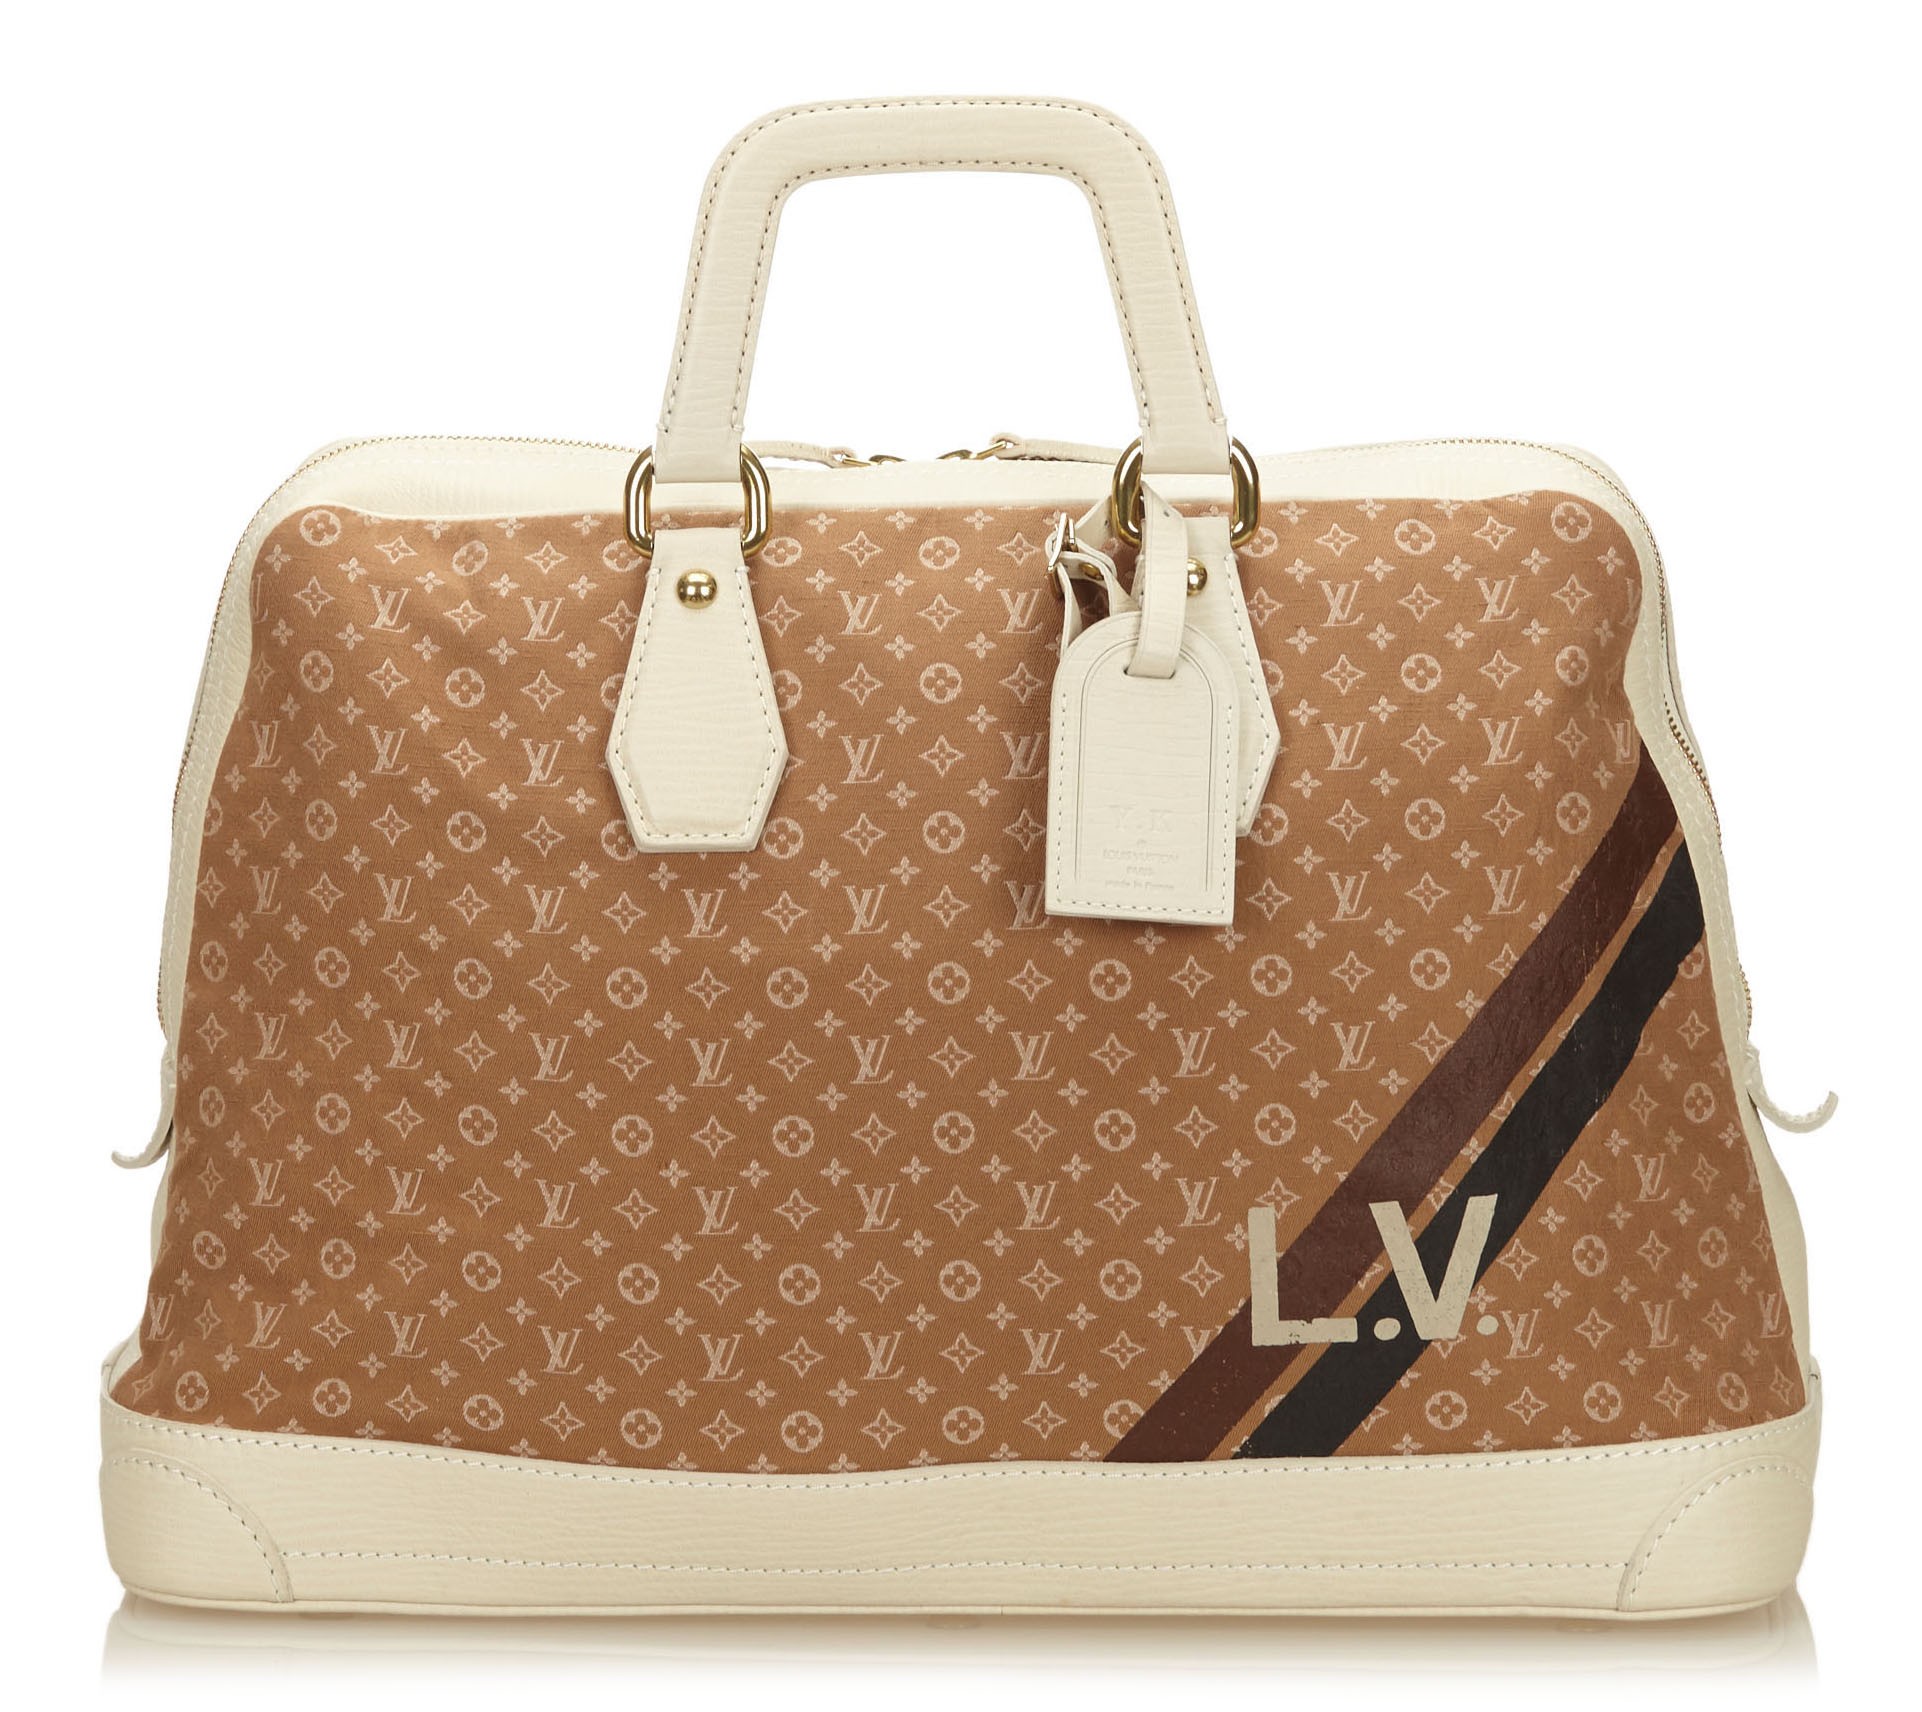 Louis Vuitton Designer Bag Travel Themed Cake